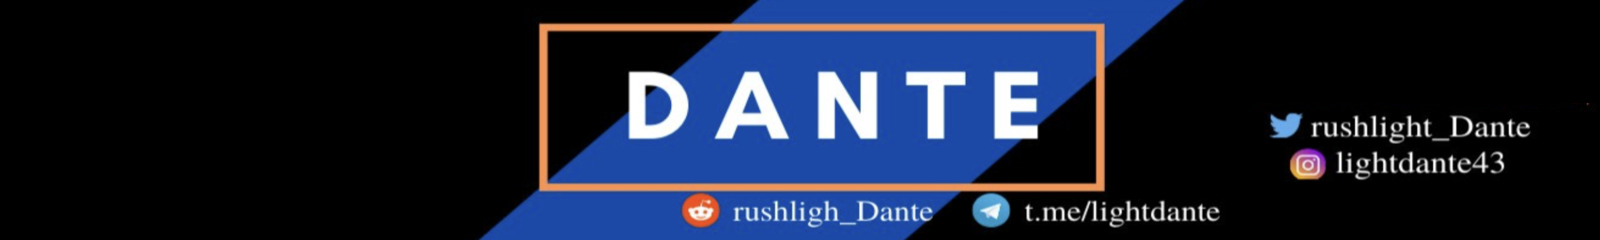 Rushlight Dante